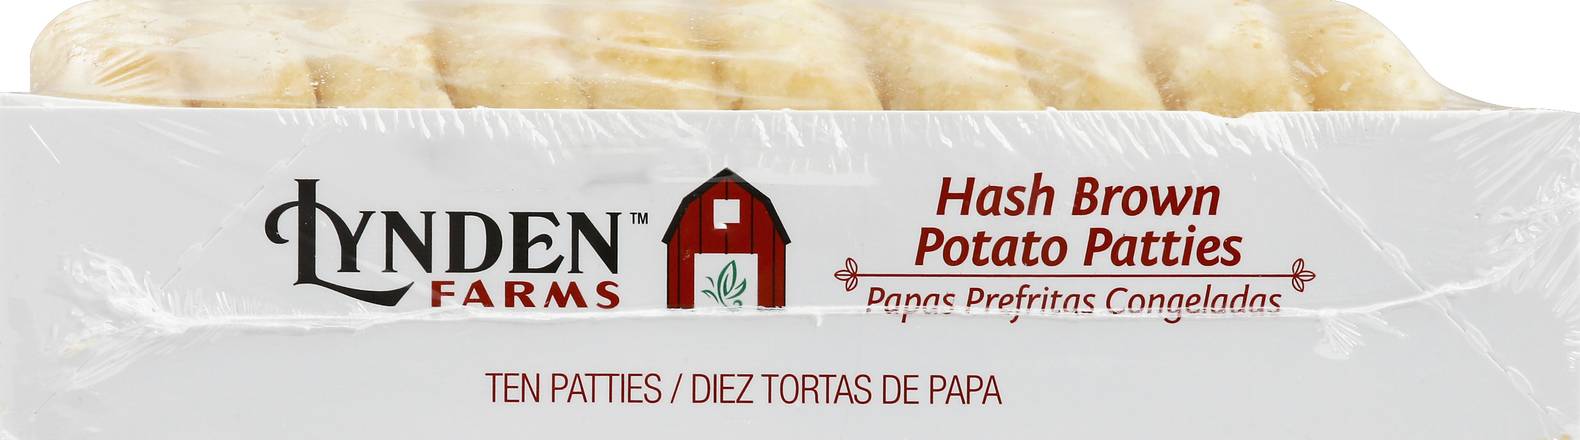 Lynden Farms Hash Brown Potato Patties (10 ct)